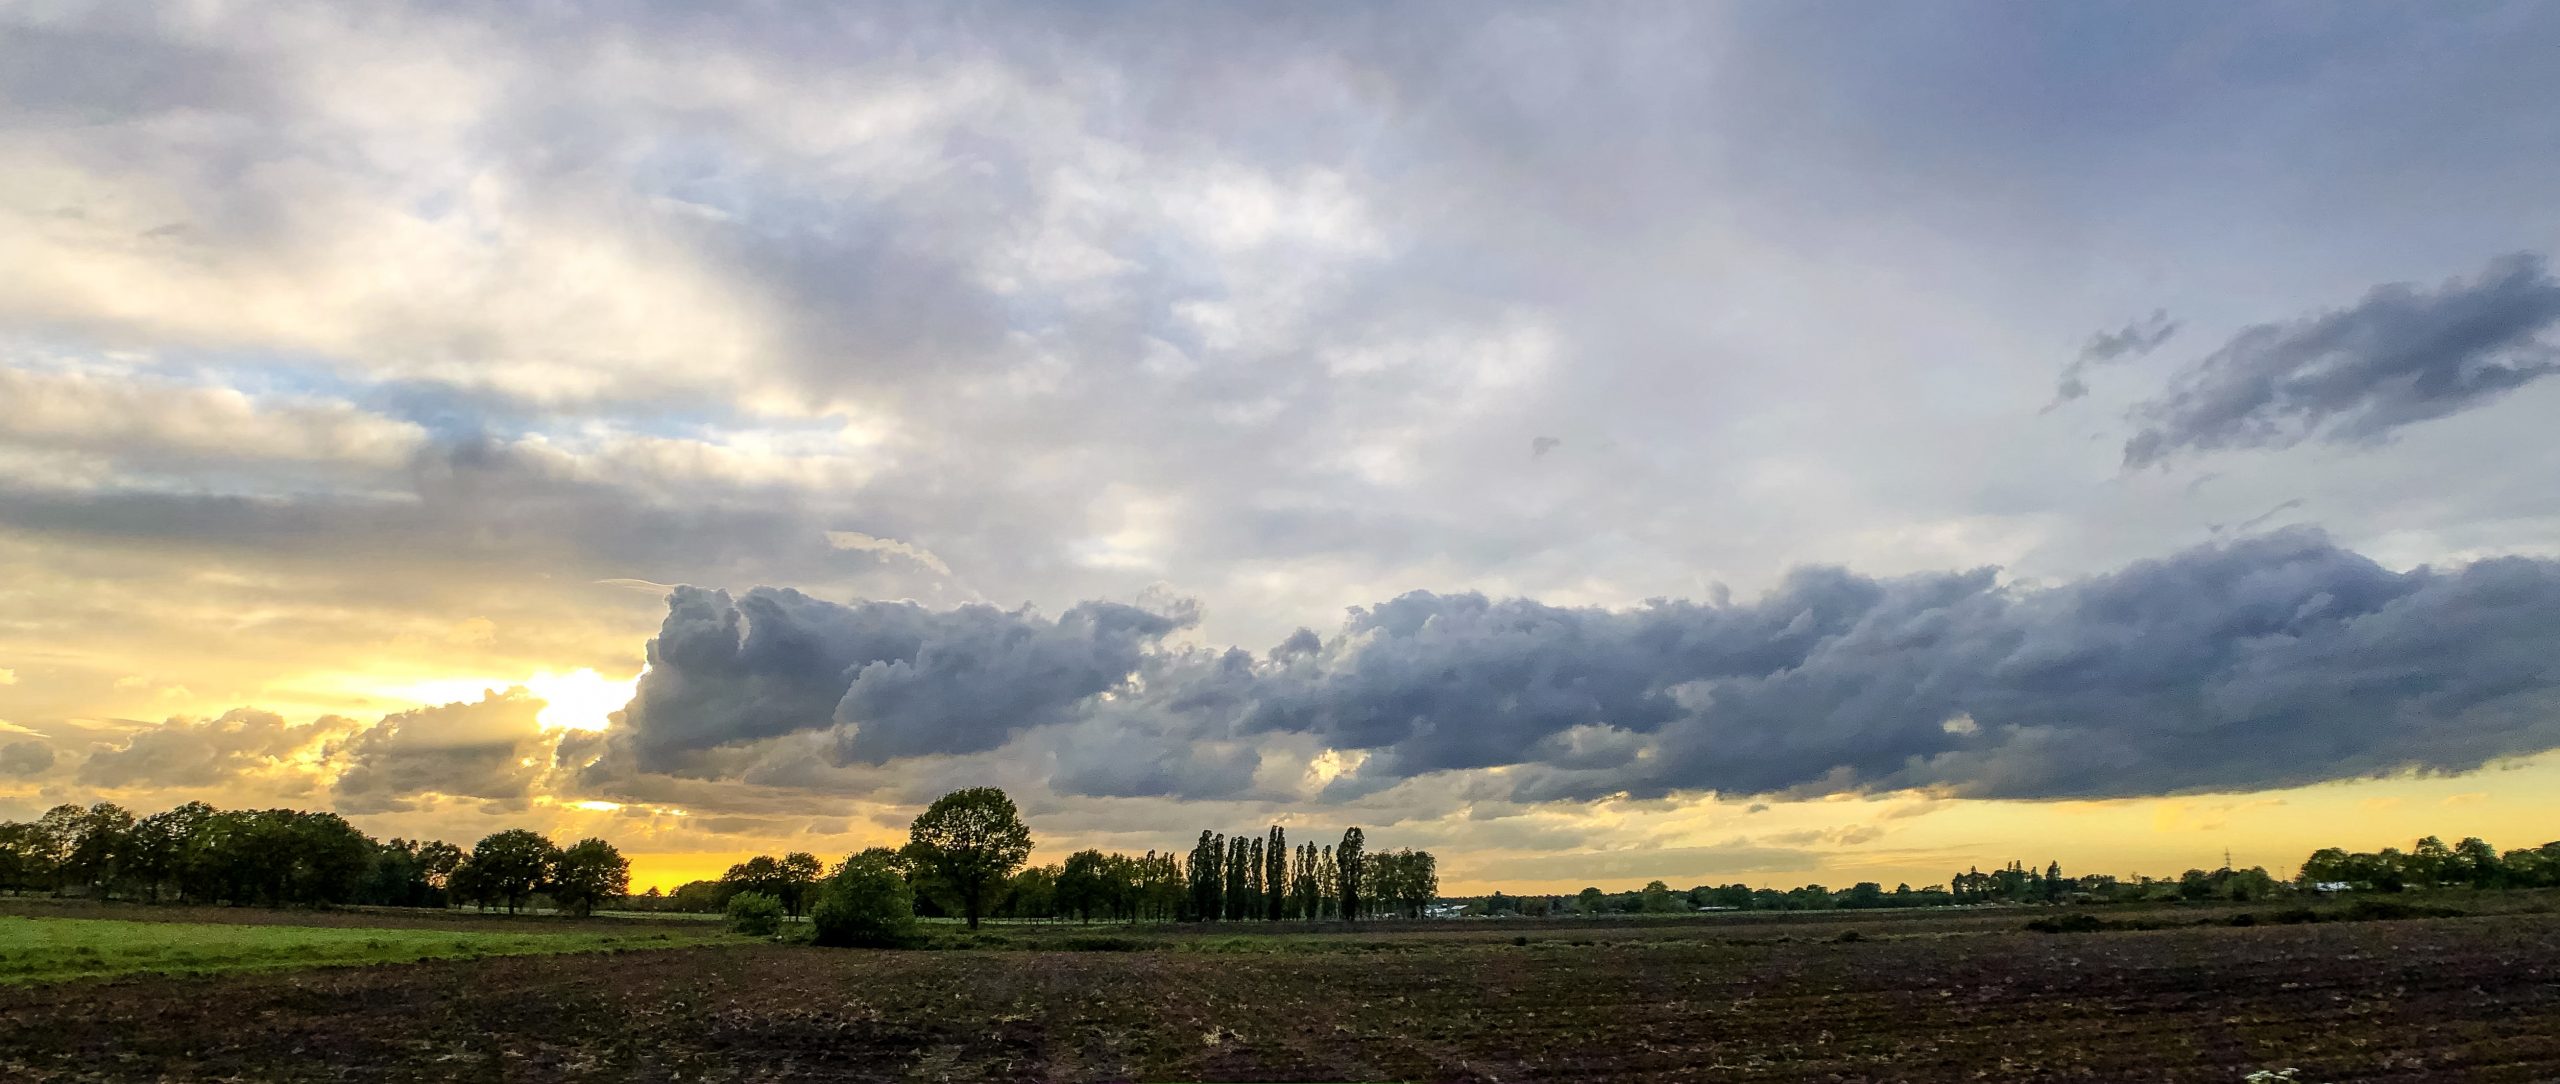 Stormy sky over a countryside landscape